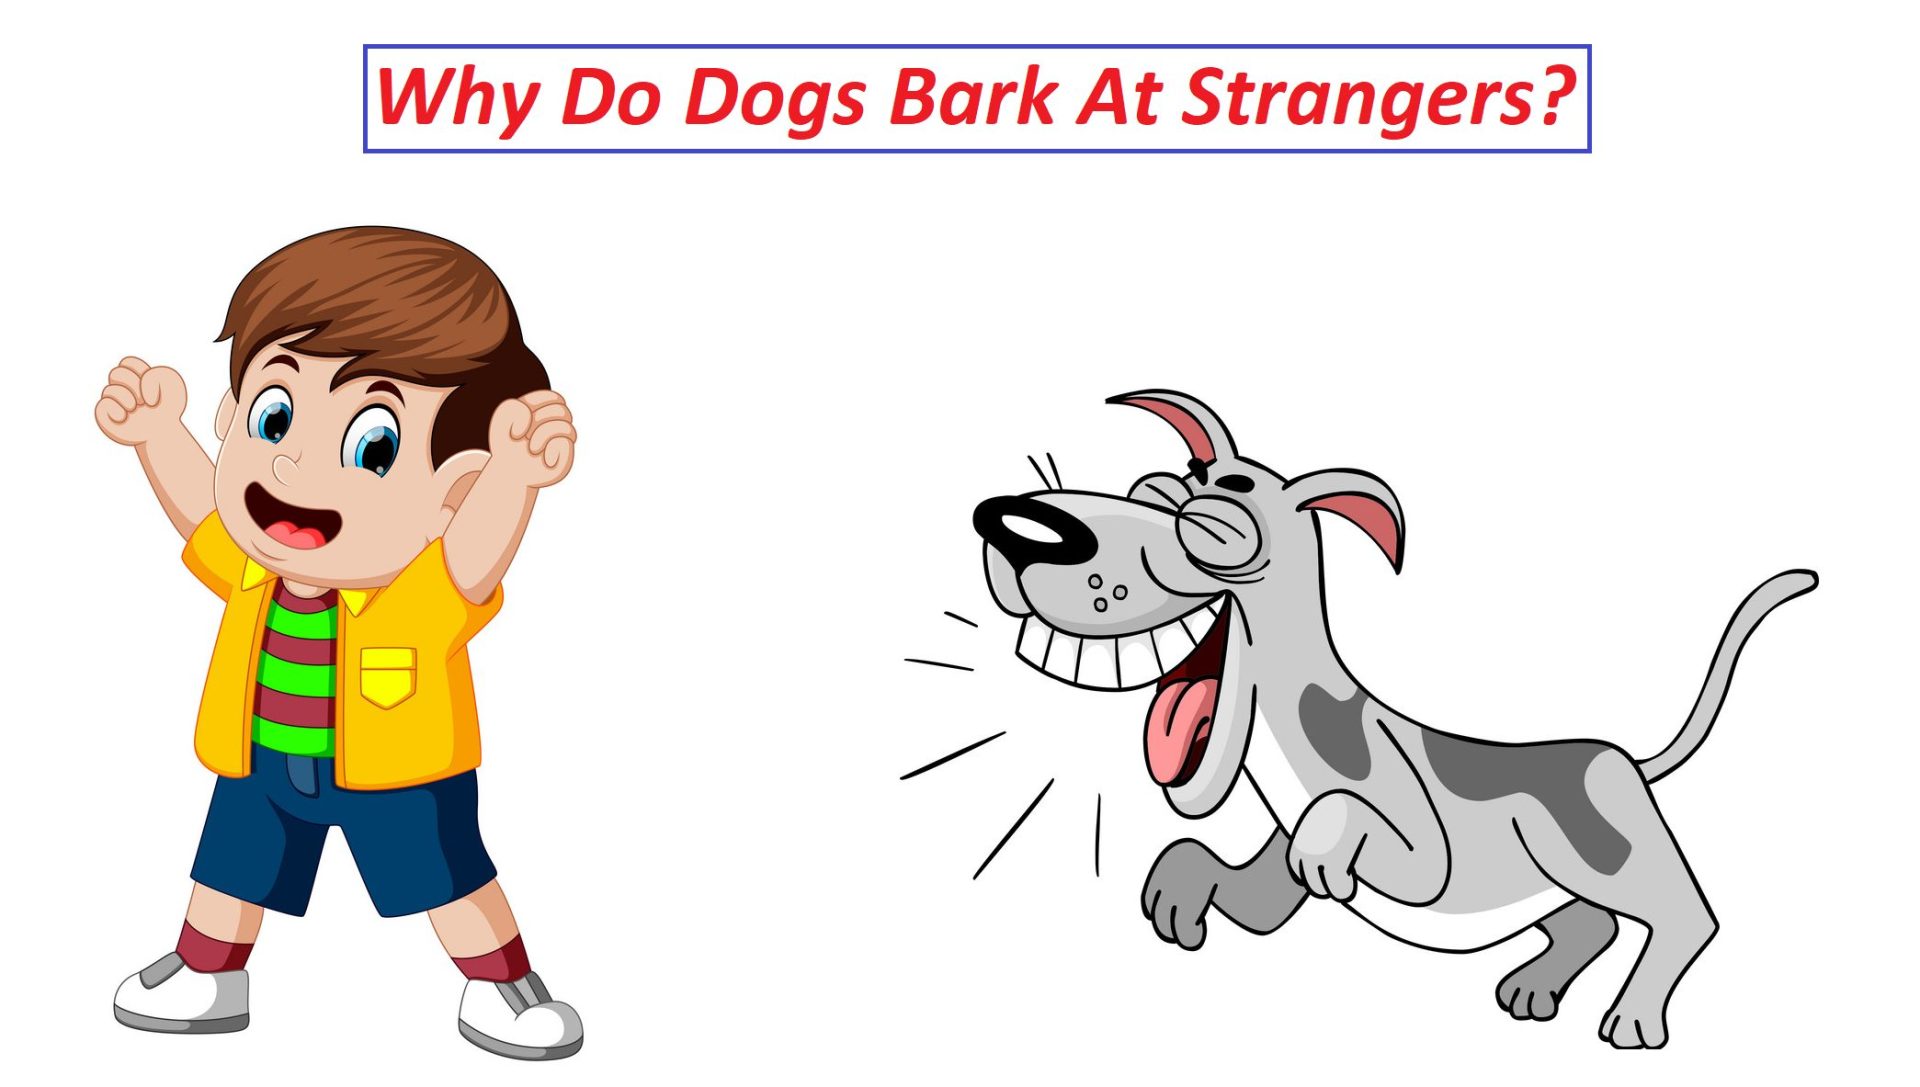 Why Do Dogs Bark At Strangers?